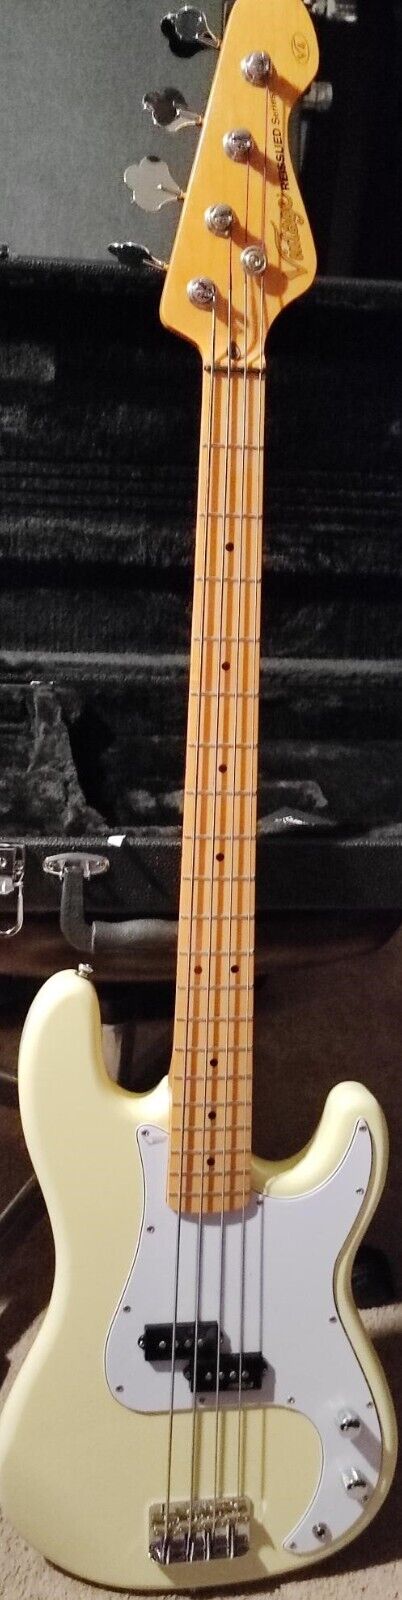 Beautiful "New" "VINTAGE REISSUED" Vintage White Precision Bass w/ Maple Neck Vintage Precision